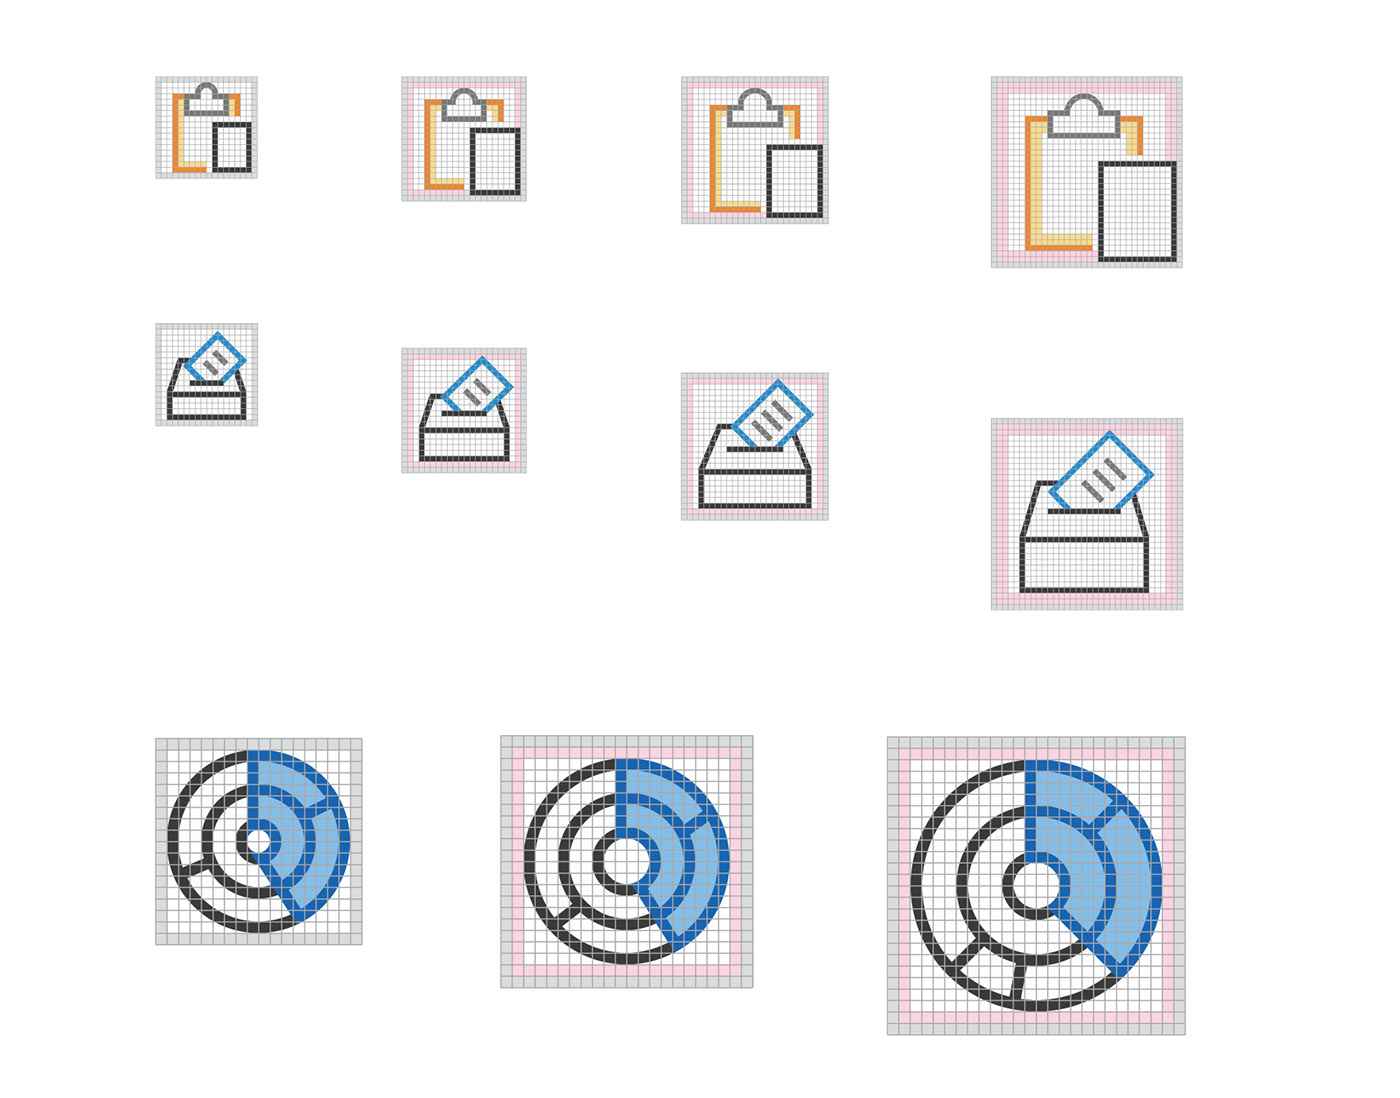 icons Lead Designer Microsoft Office Production vector art visual language